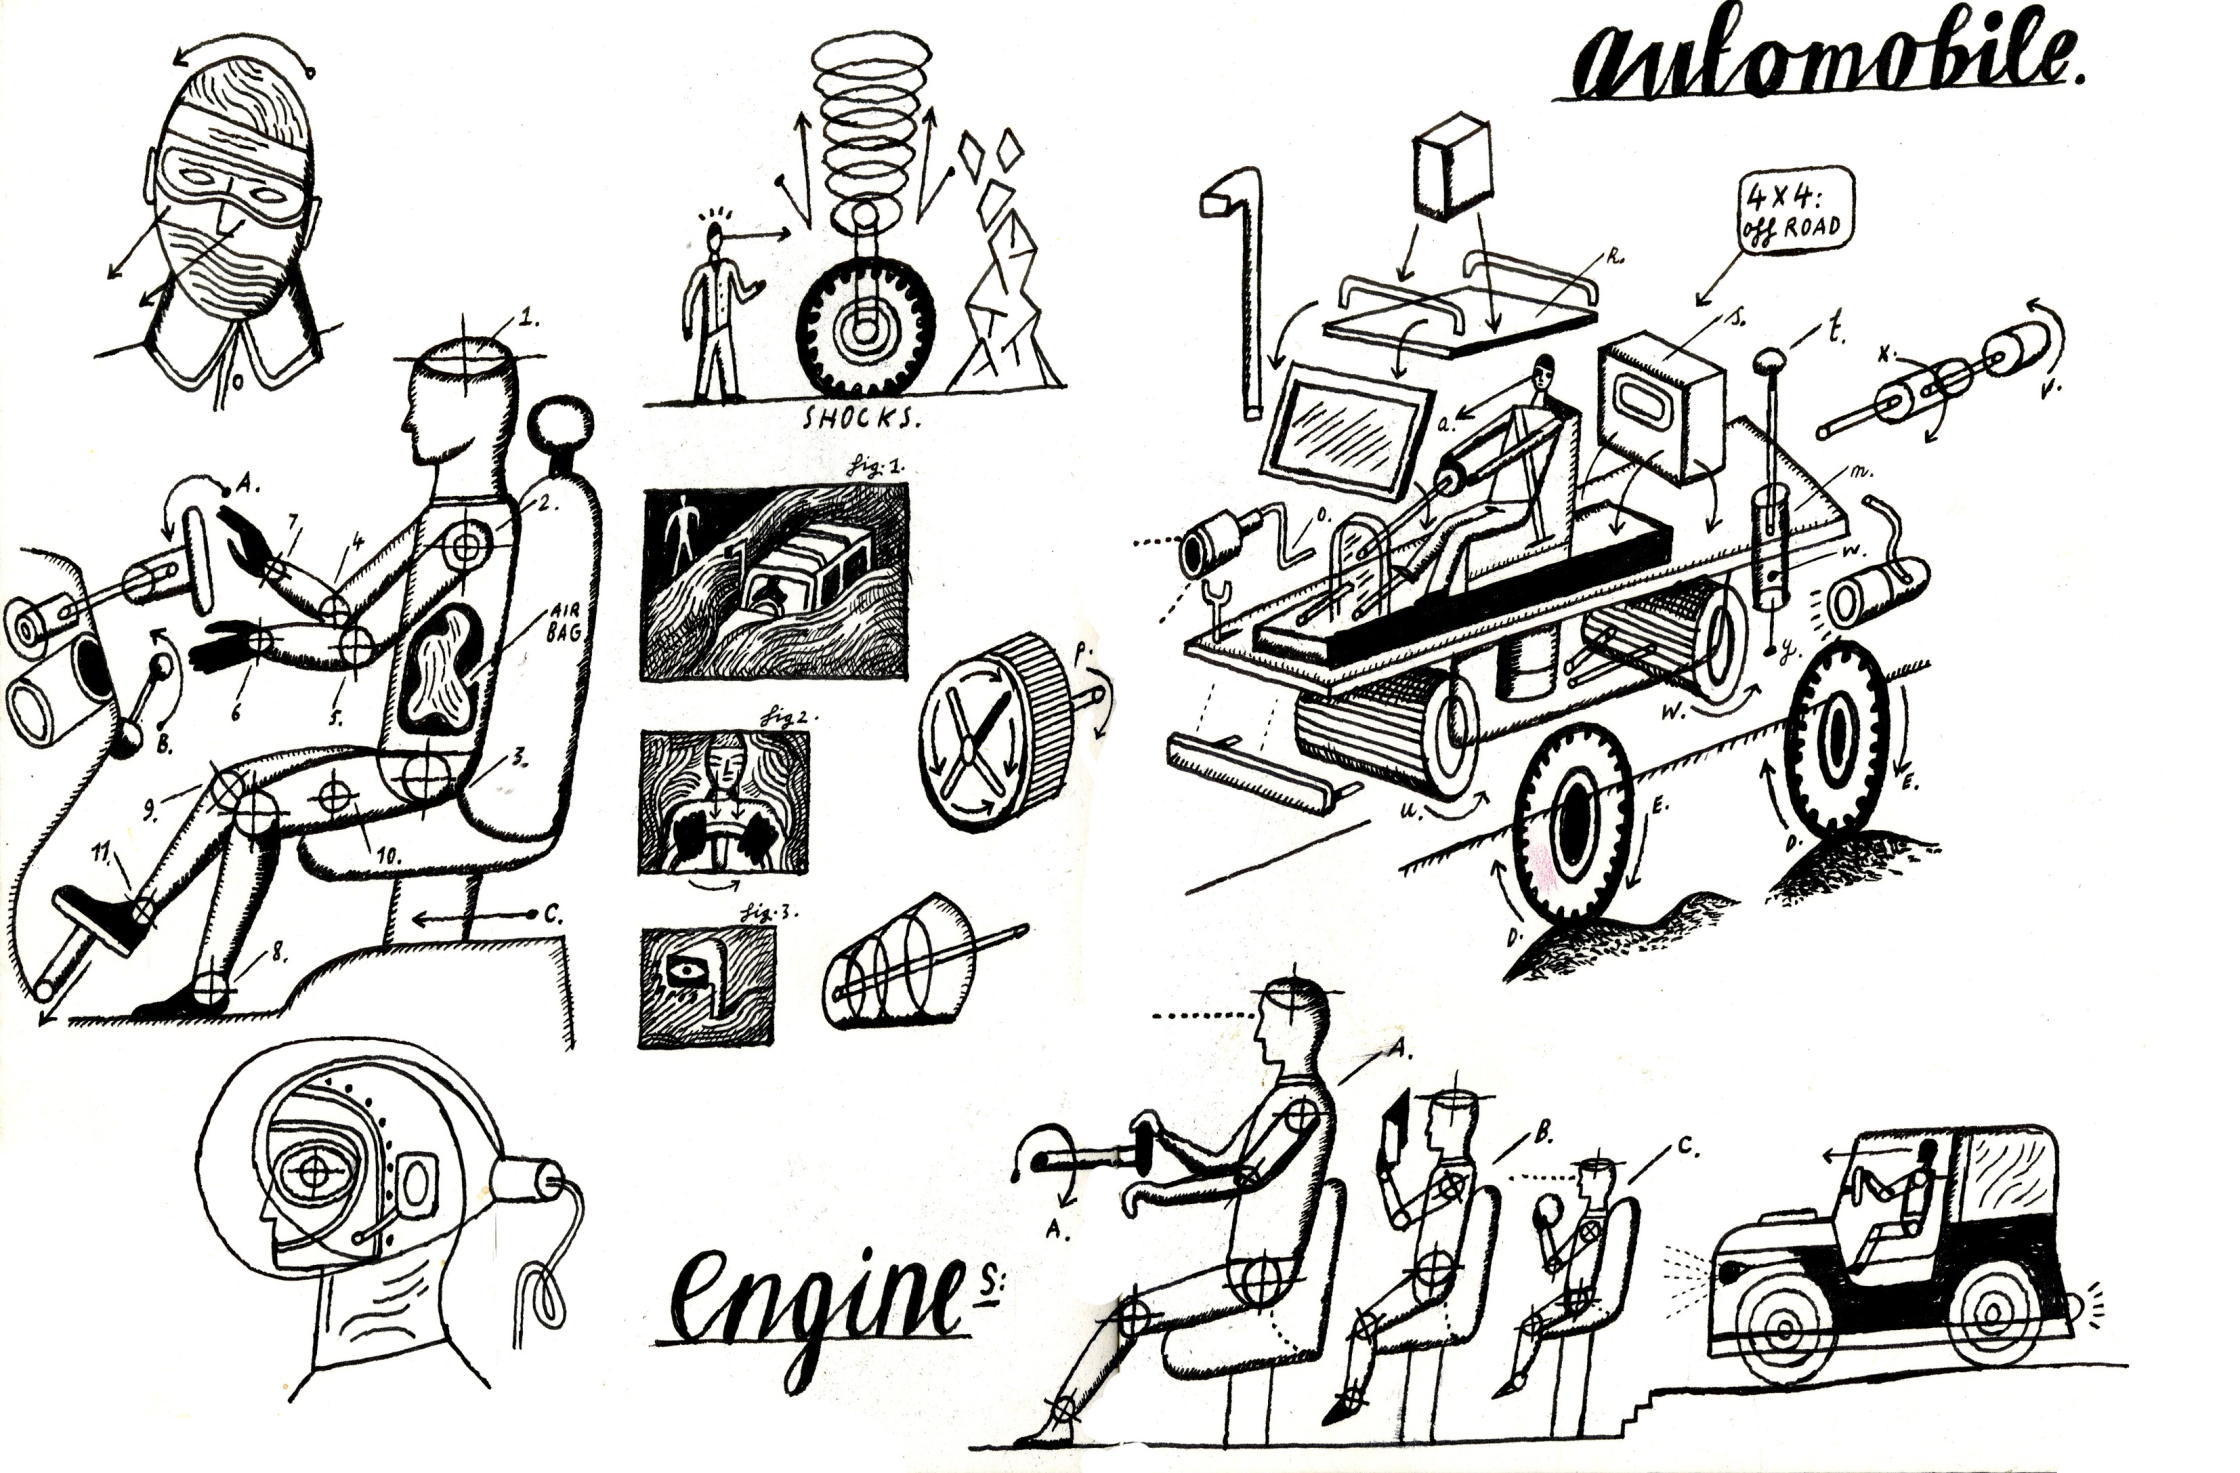 Automobile Engines